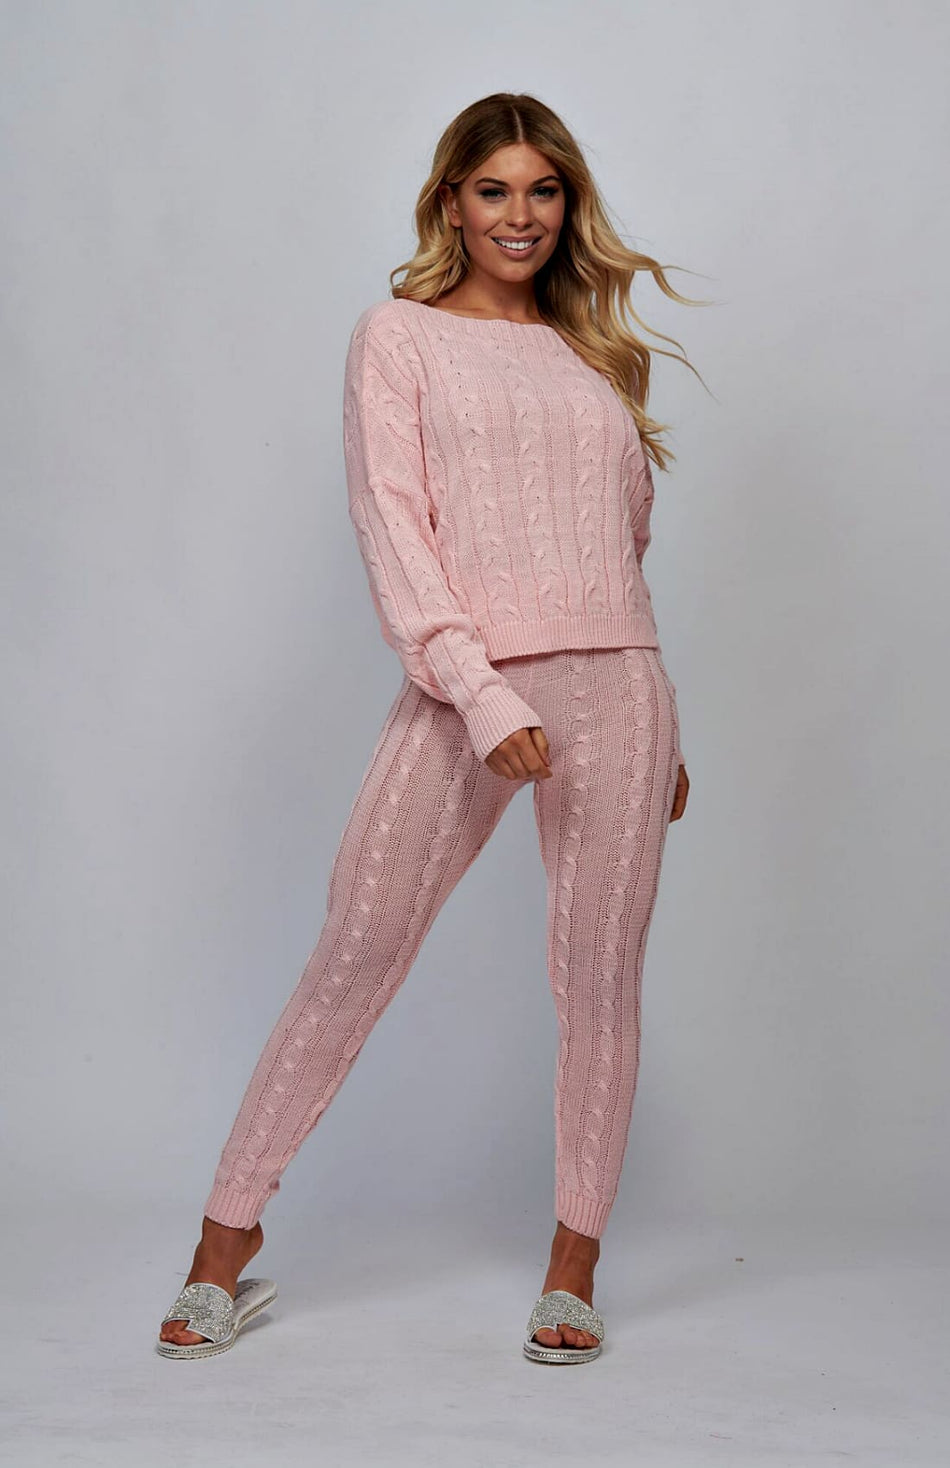 LUXFORM® LEGGINGS - COWGIRL  Pink activewear, Active wear tops